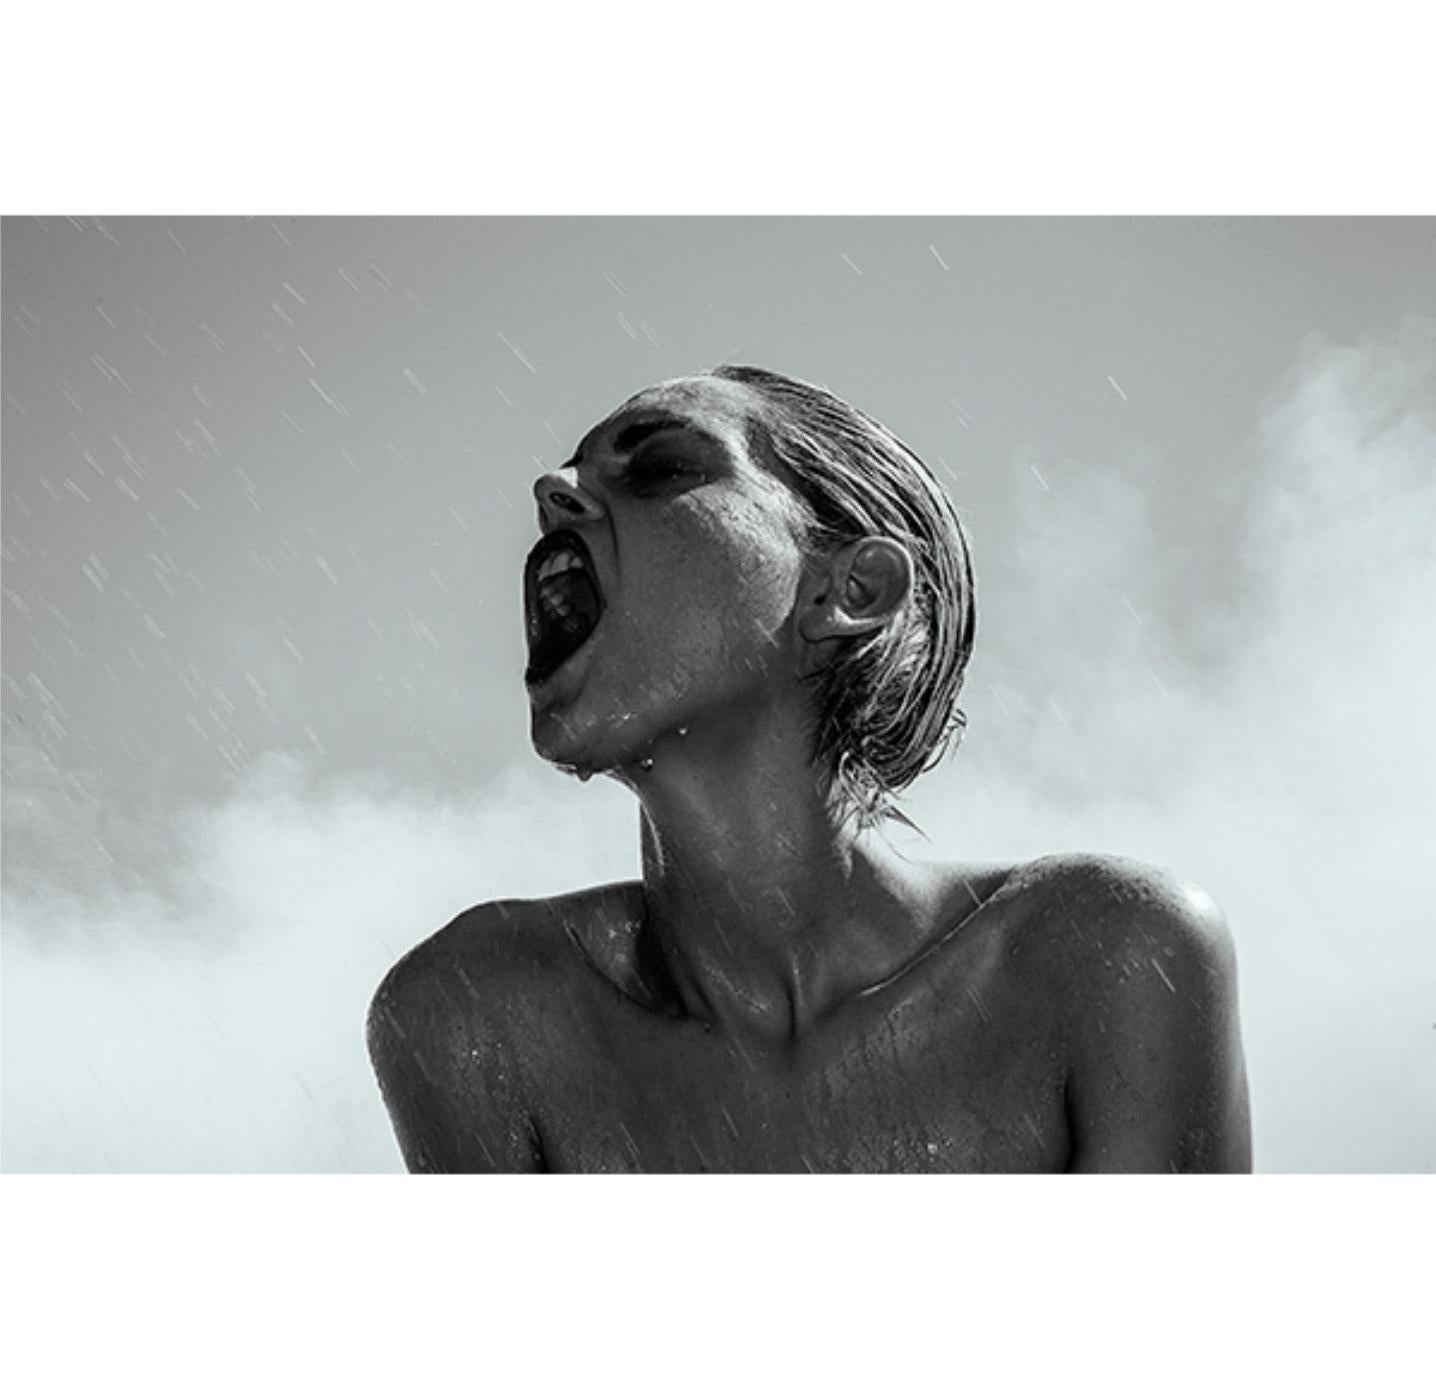 Tyler Shields Figurative Photograph - Pouring Rain (20" x 30")